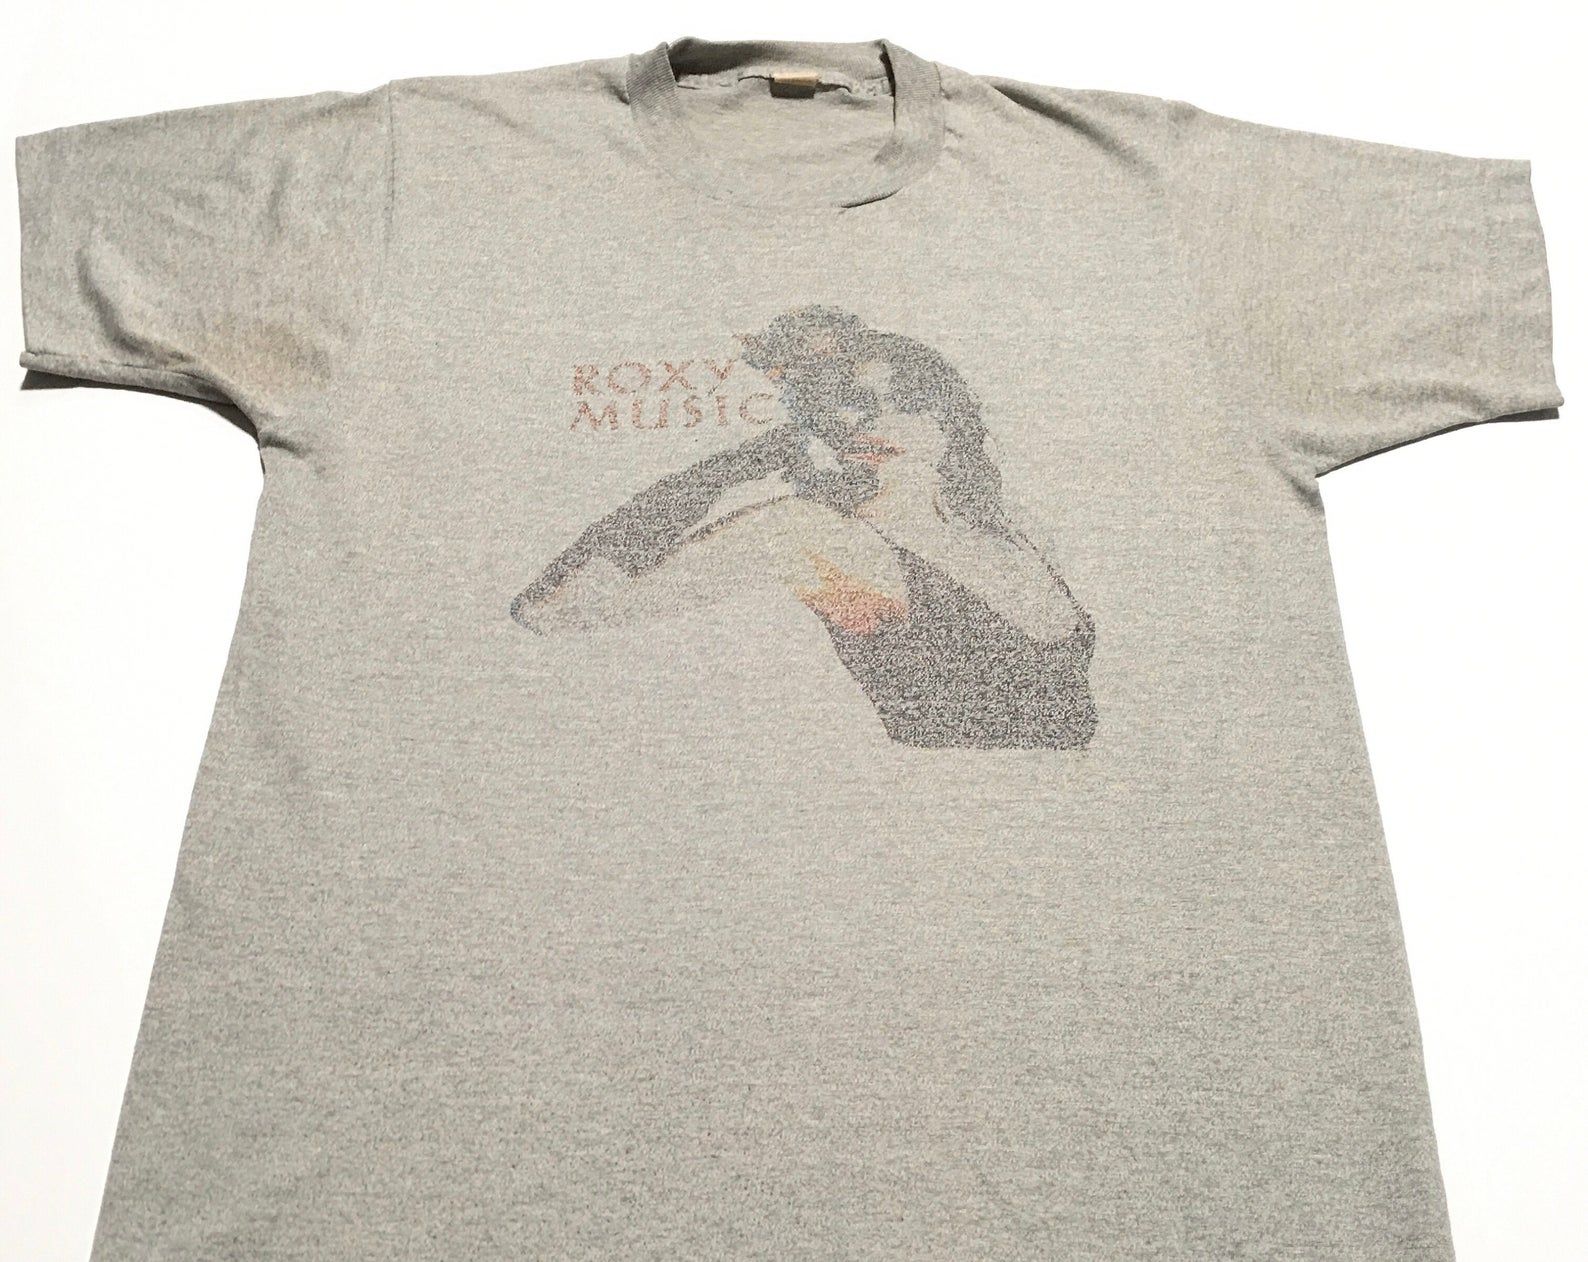 1983 Roxy Music The High Road Us Tour Distressed Single Stitch Vtg T-Shirt